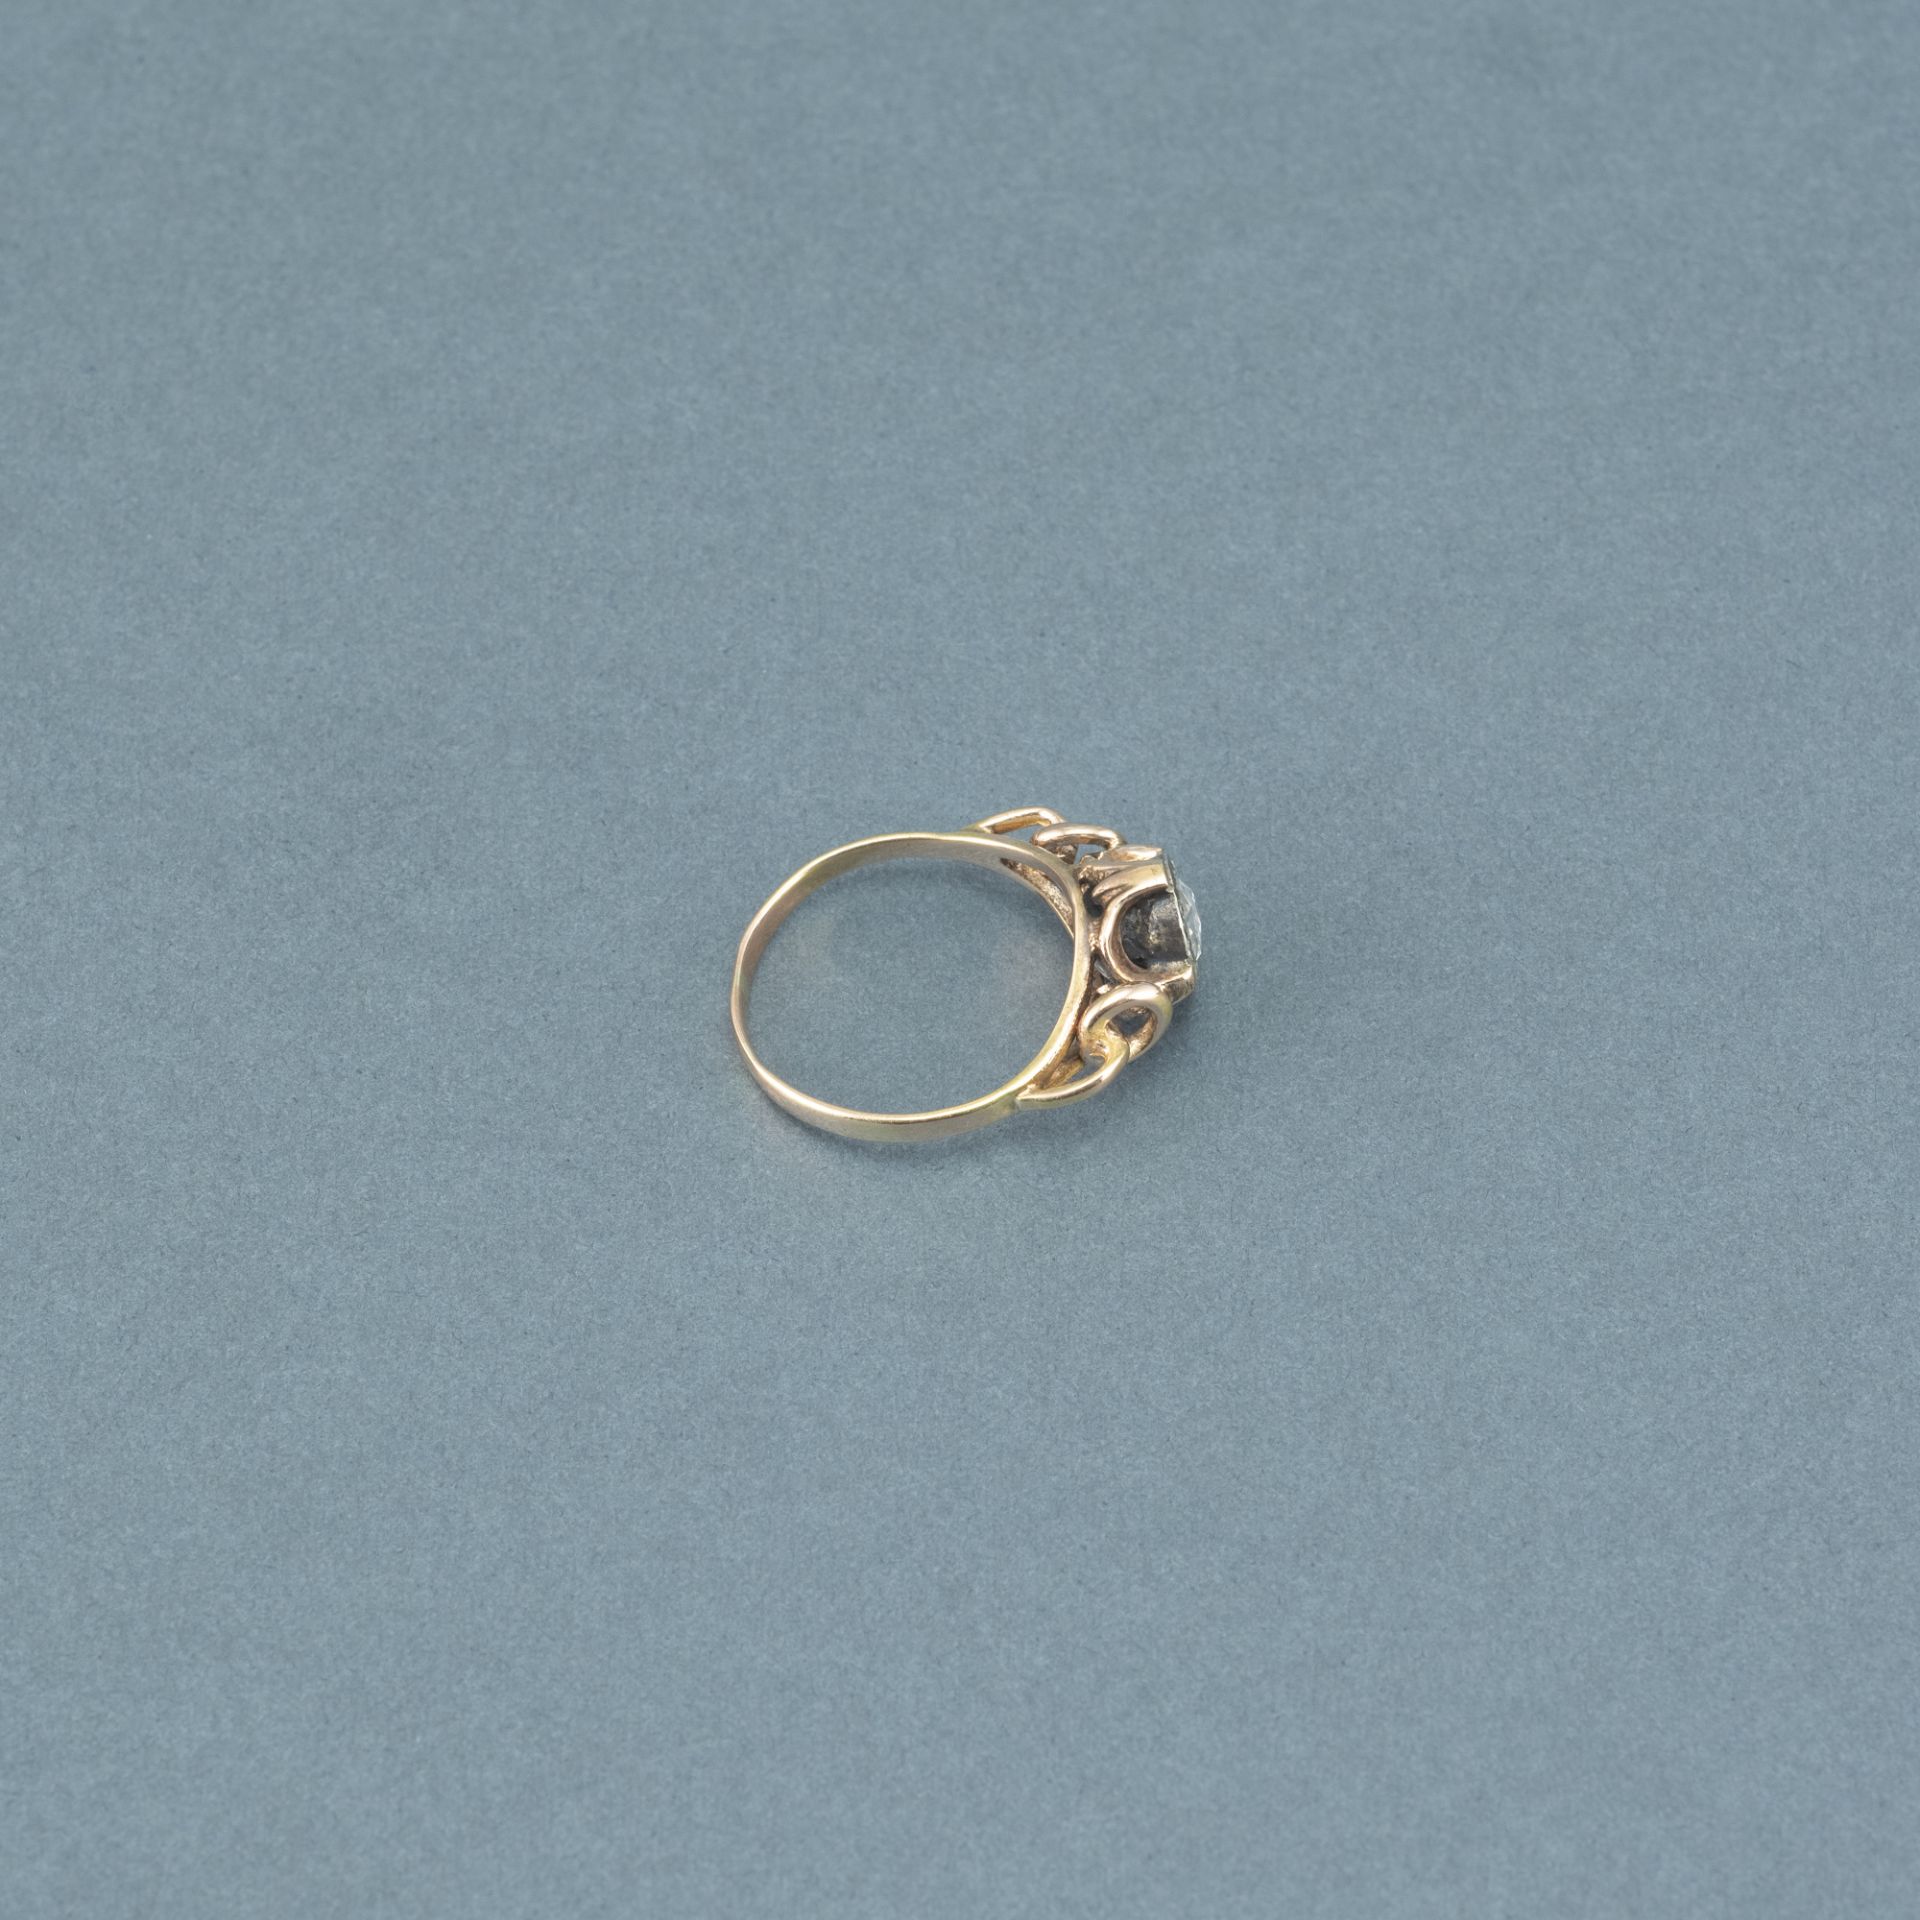  Ring  - Image 6 of 6